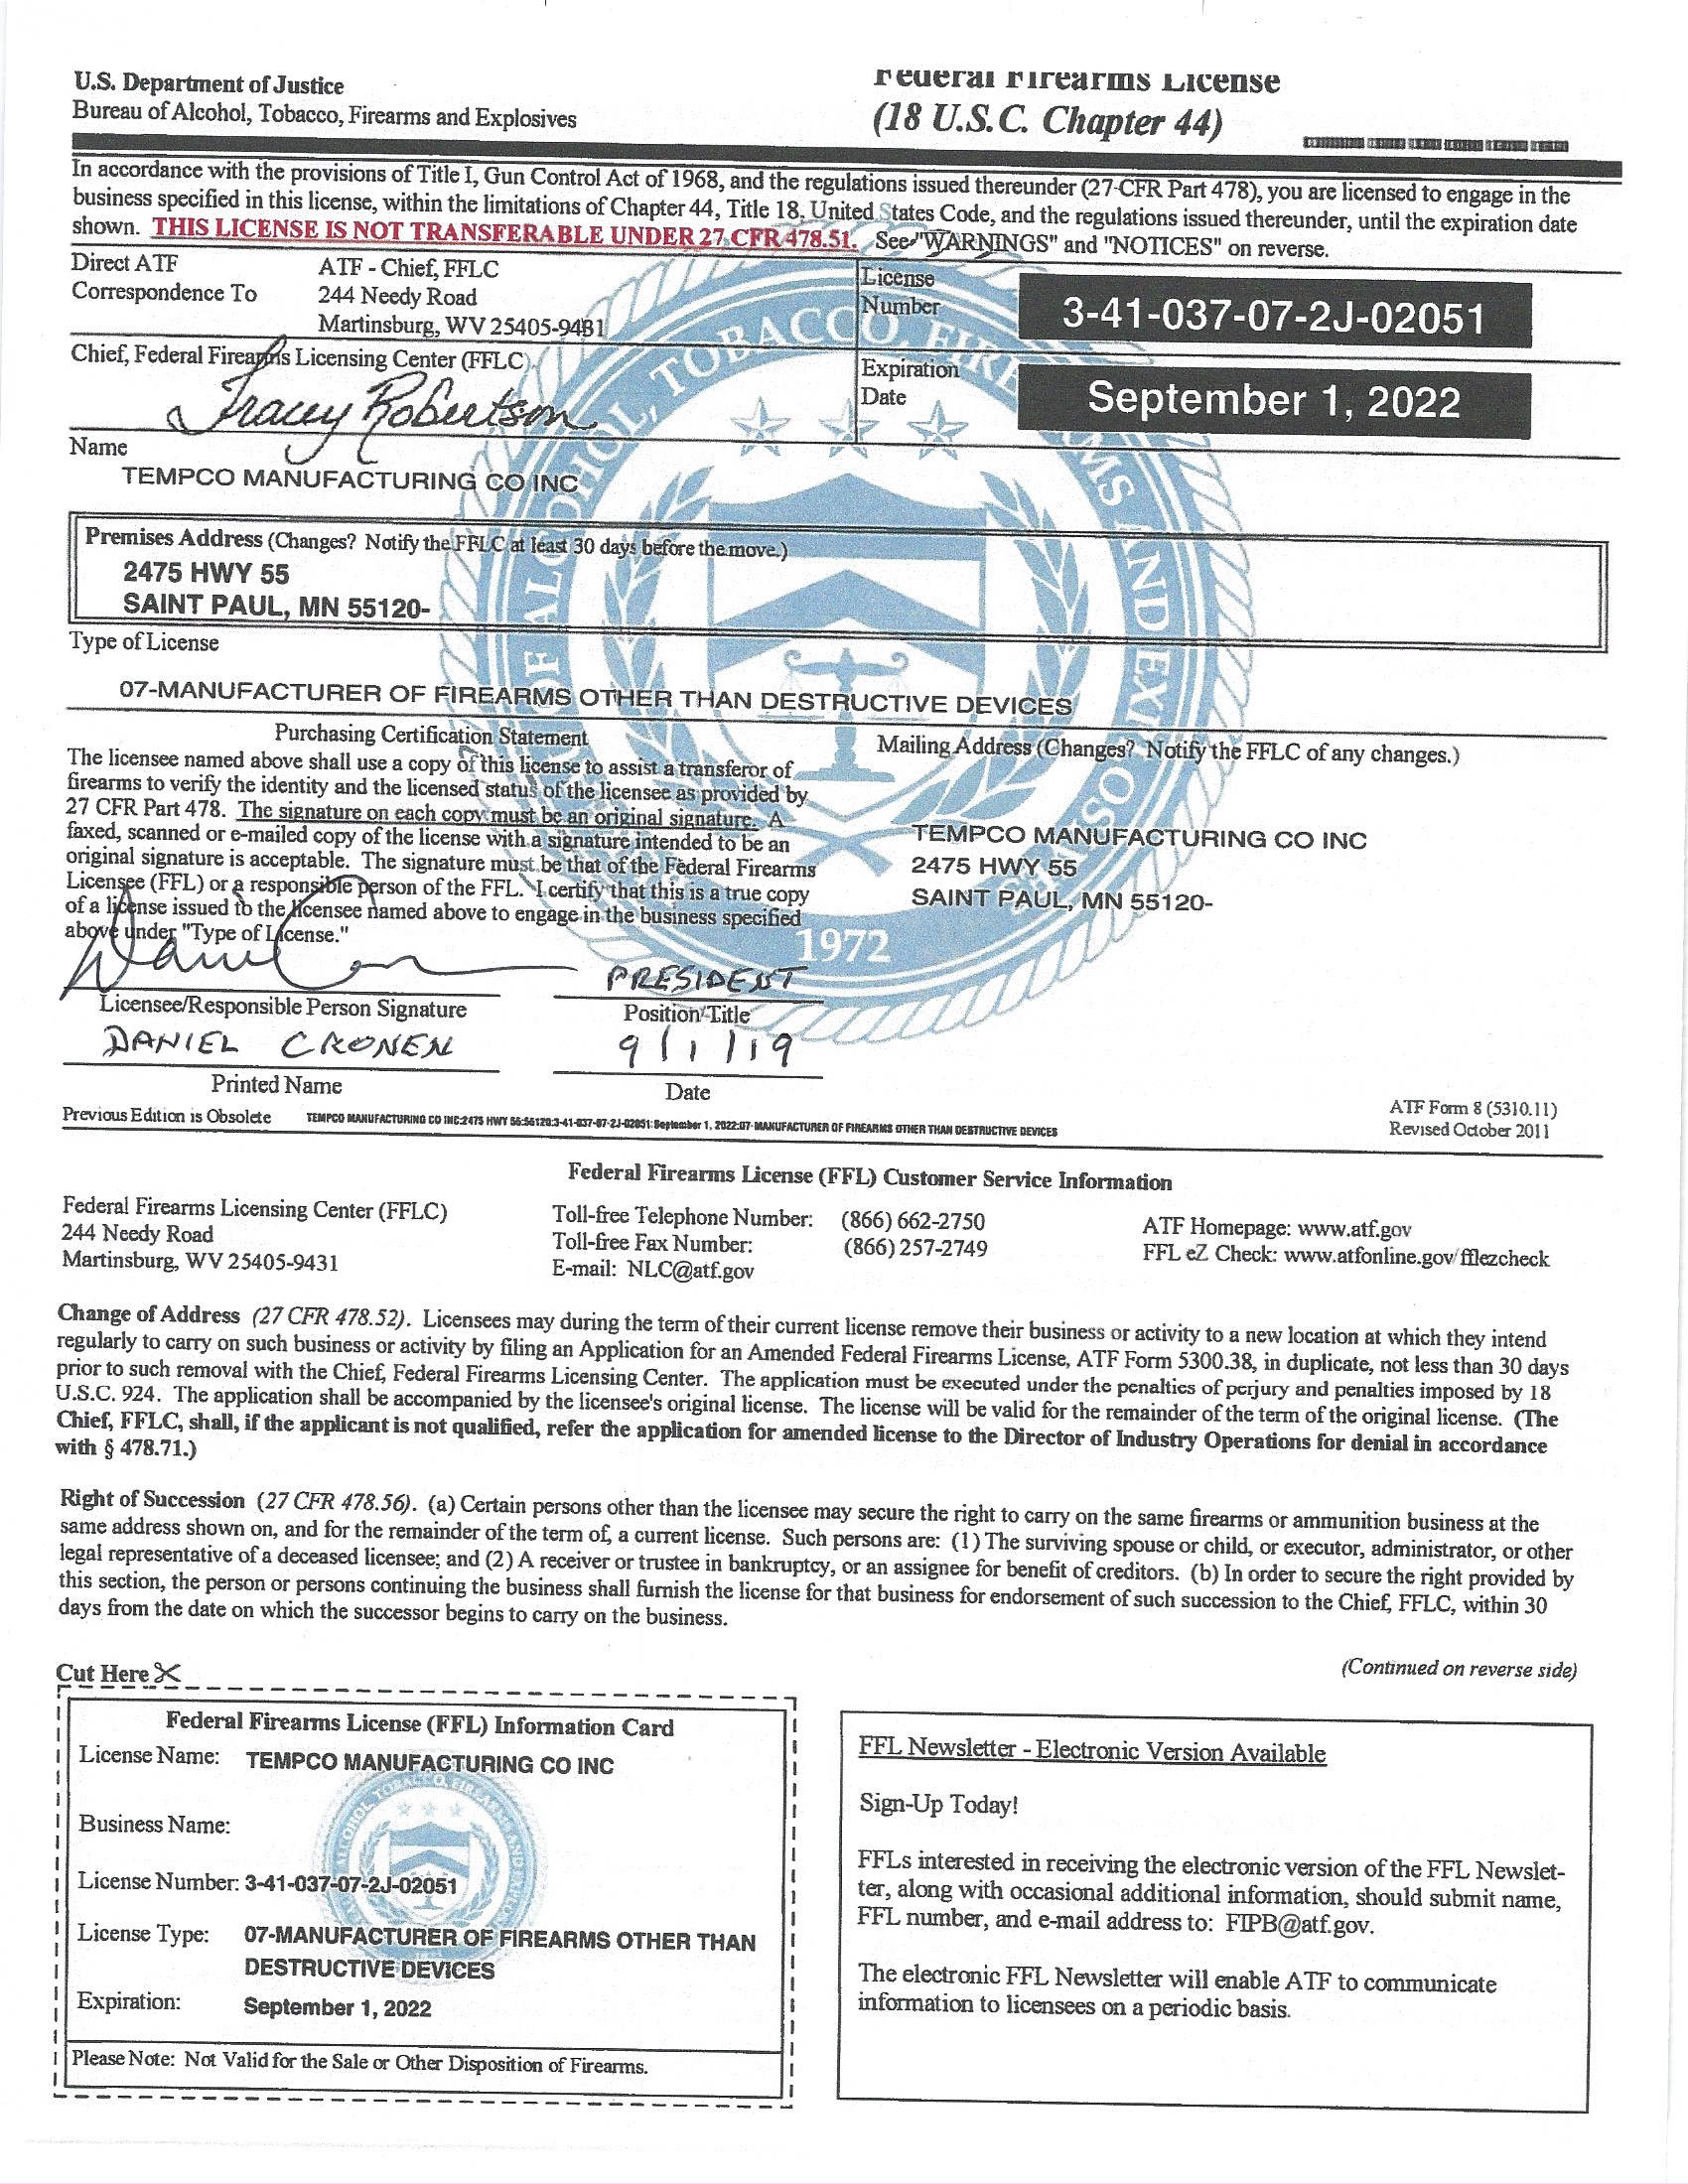 Tempco Federal Firearms License